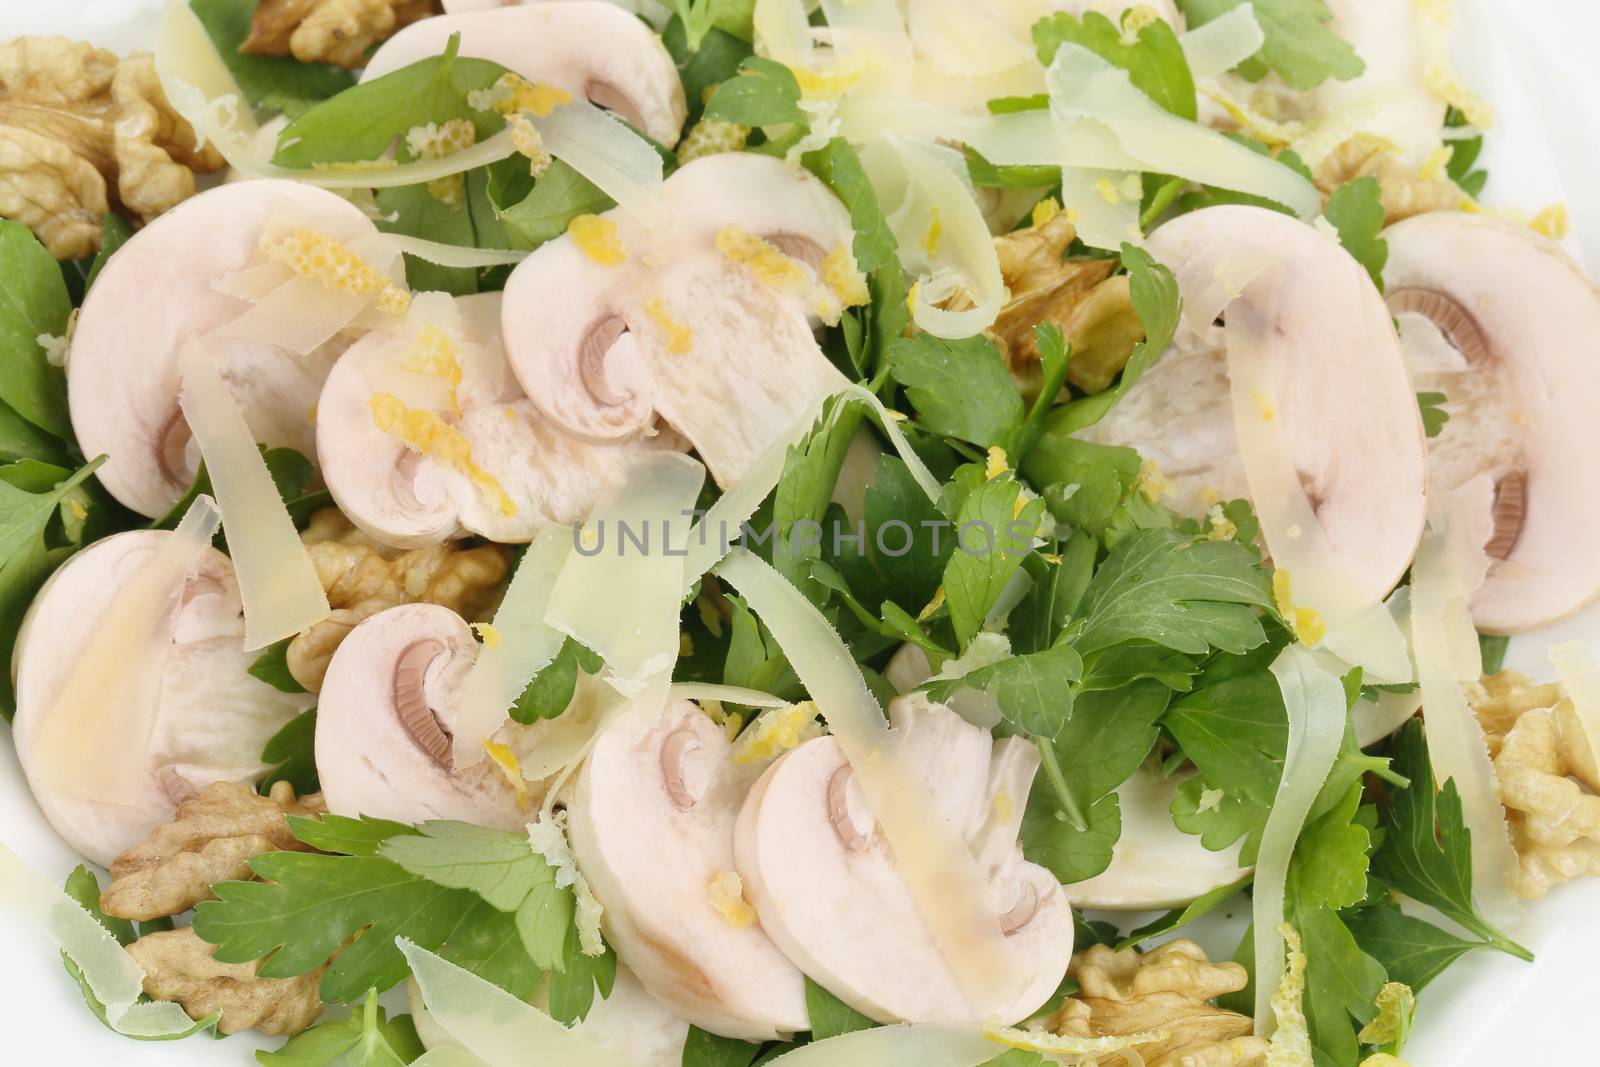 Mushroom salad with walnuts and parsley. by indigolotos